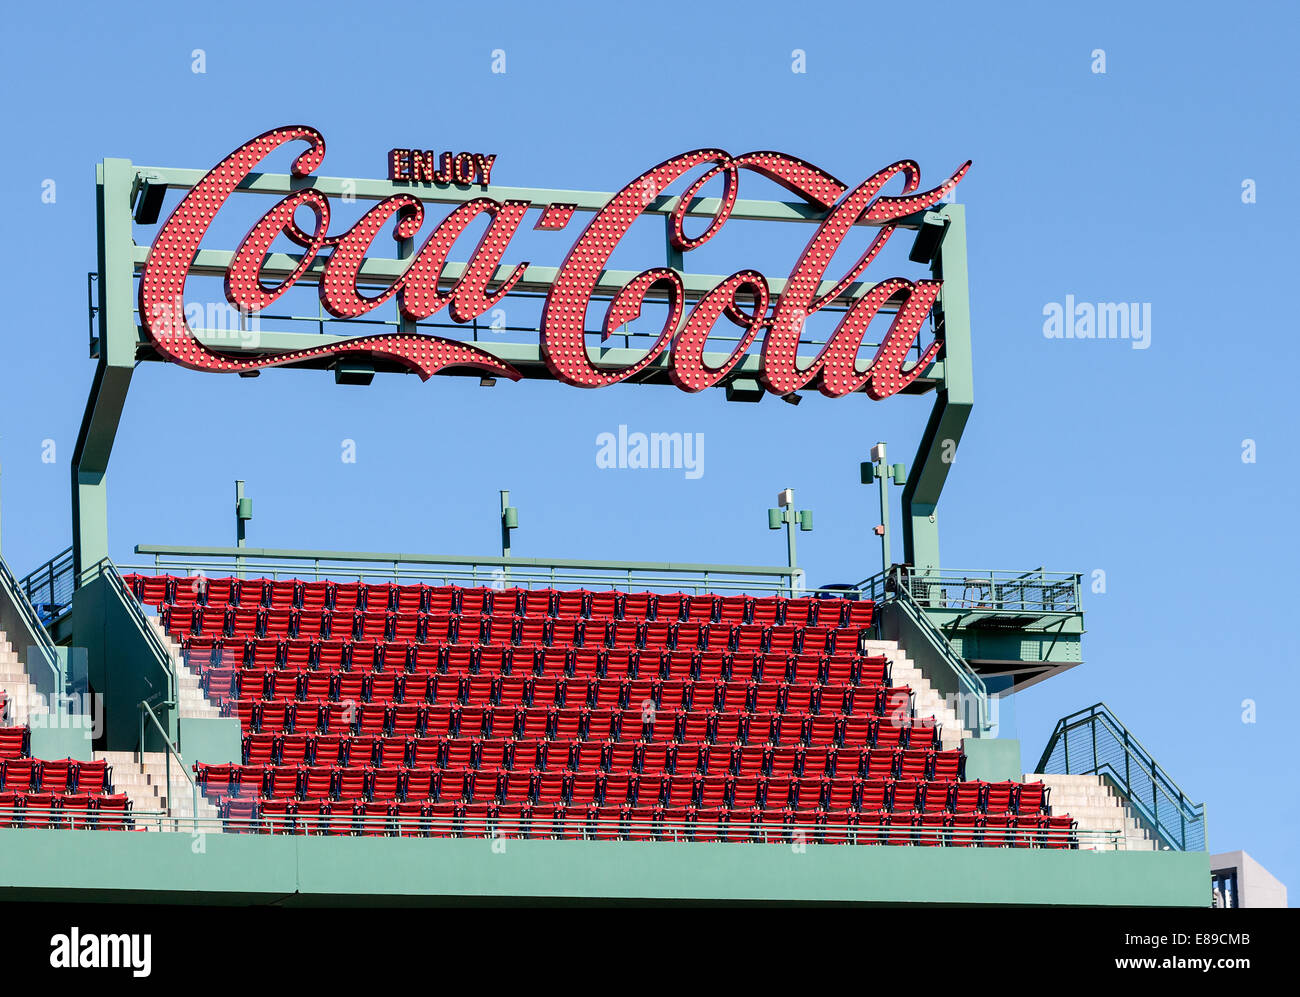 Coca Cola Pavilion stands sign at Fenway Baseball Park Stadium in Boston, Massachusetts. Stock Photo